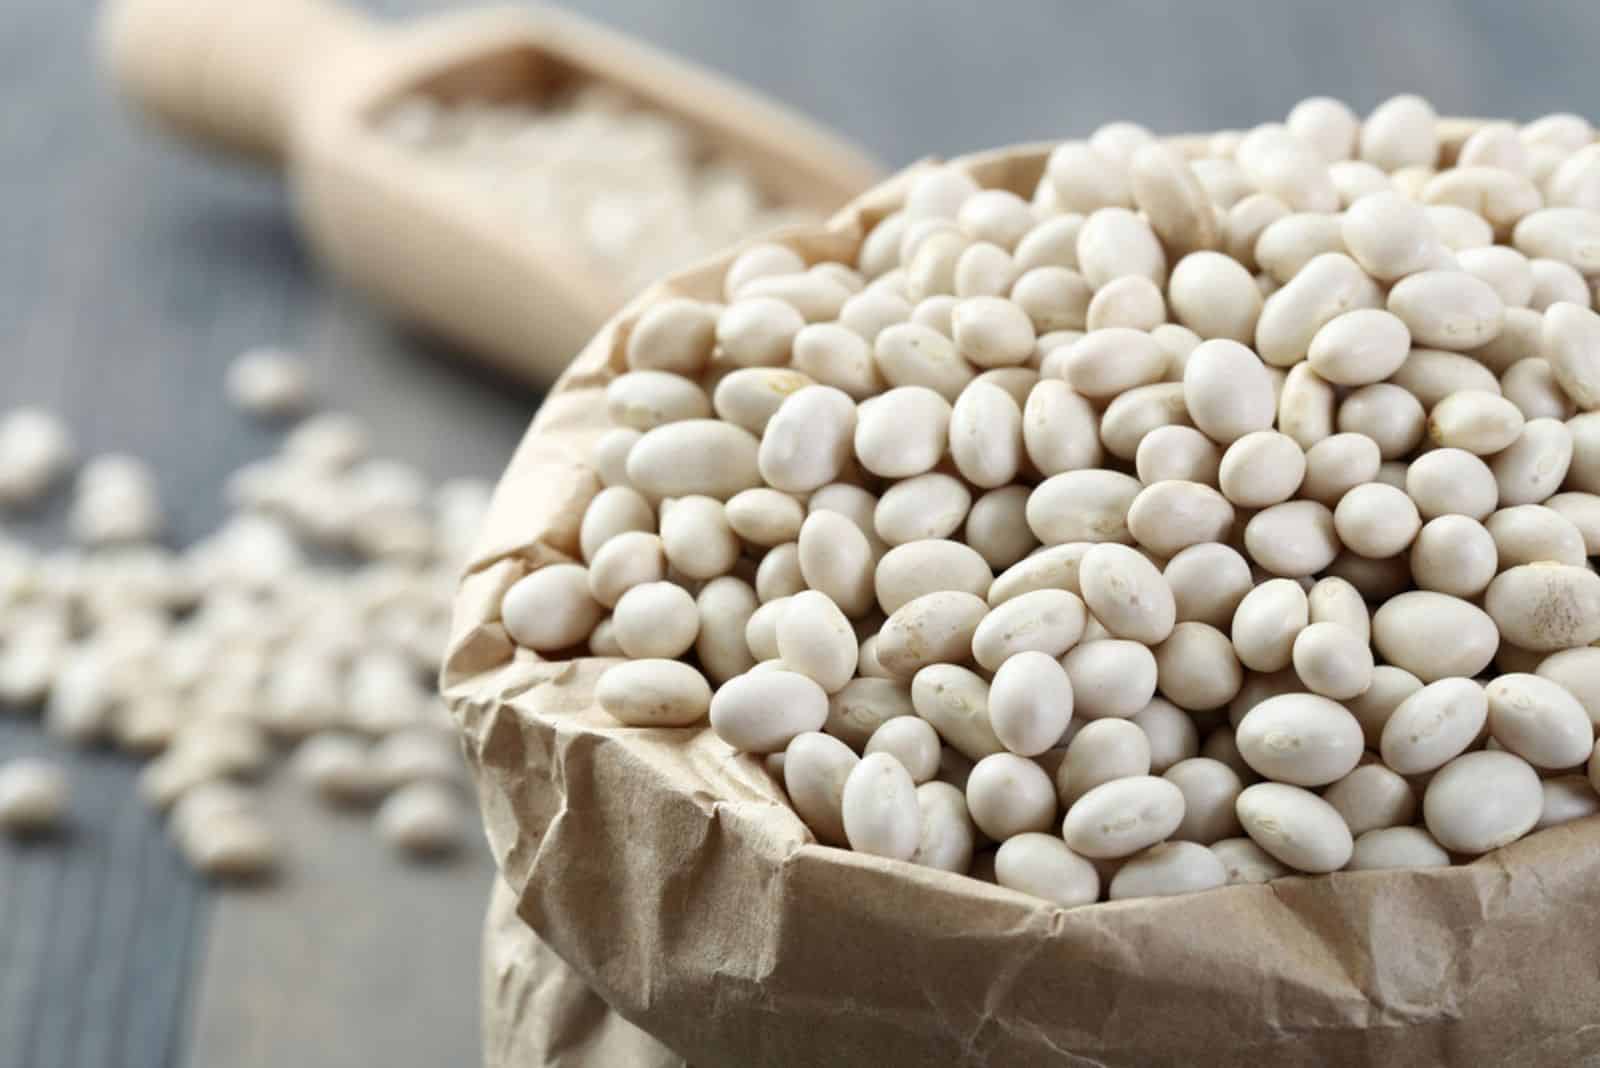 White Beans in a bag